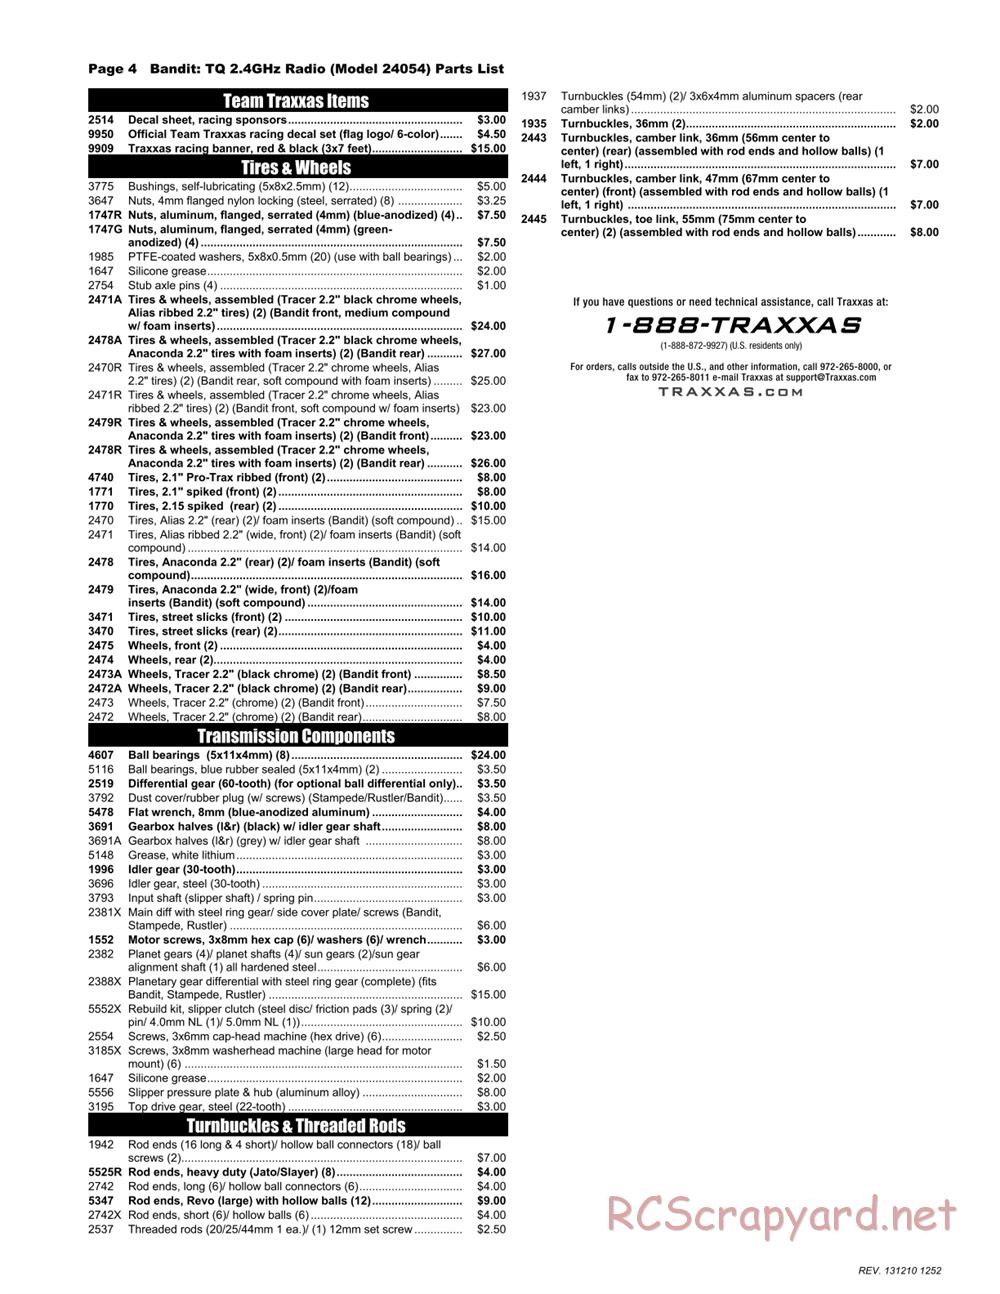 Traxxas - Bandit XL-5 (2013) - Parts List - Page 4